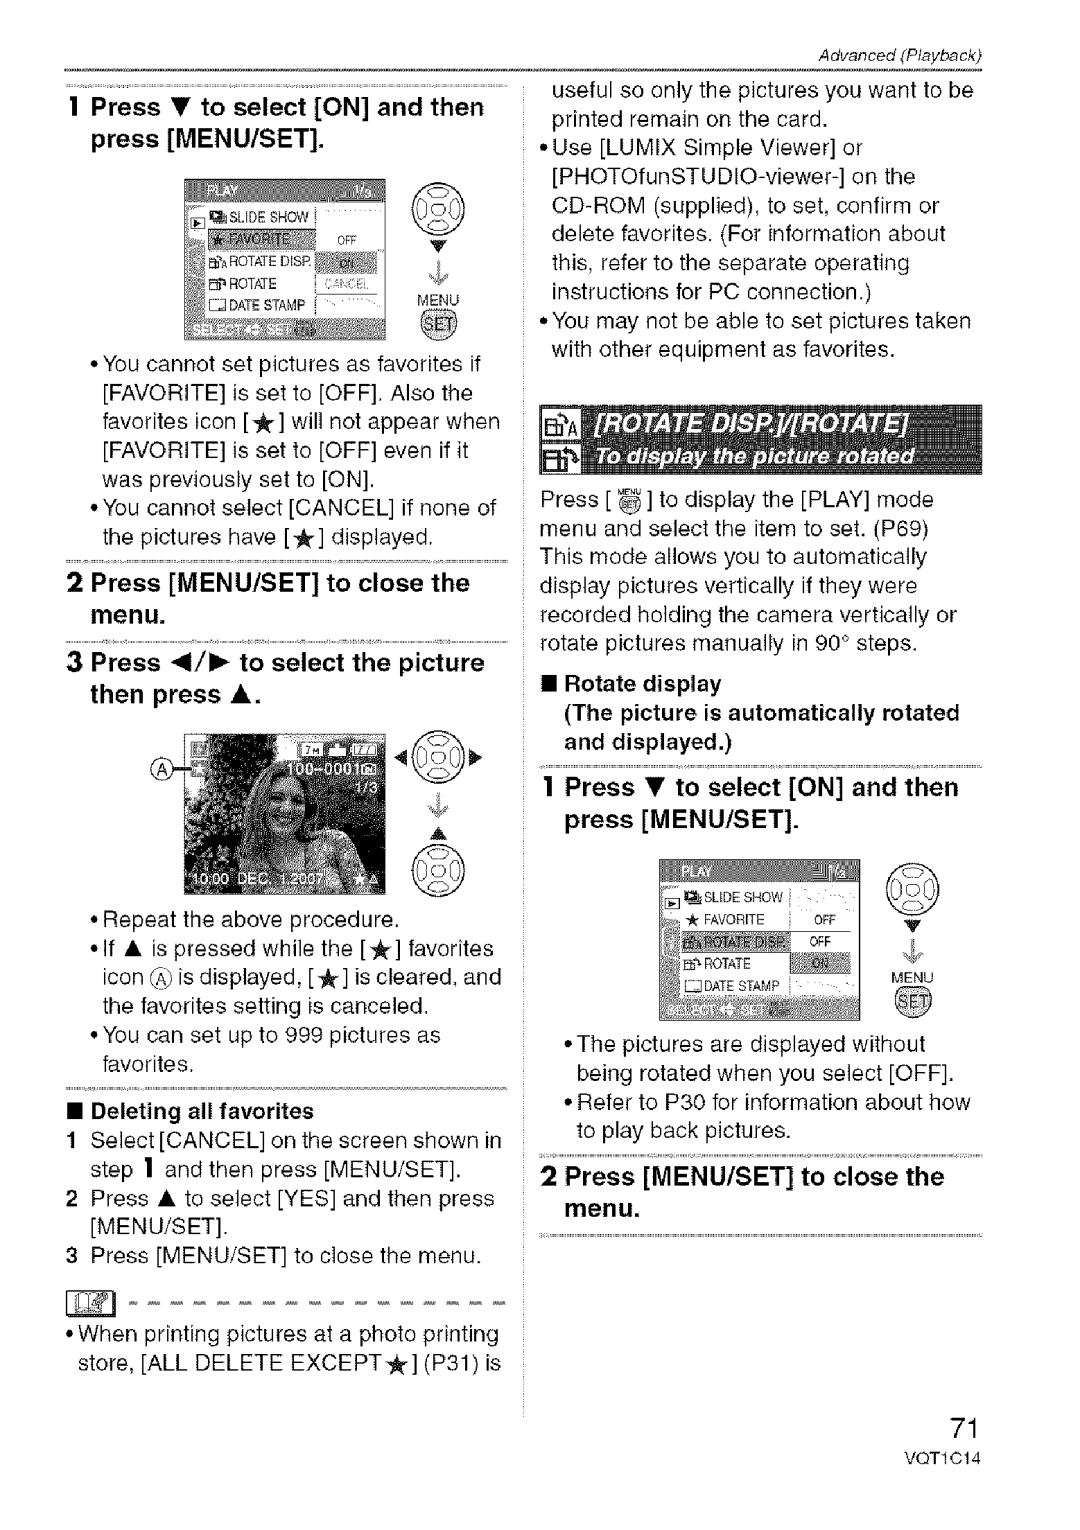 Panasonic DMC-FX10, DMC-FX12 operating instructions Press to select on and then press MENU/SET, Deleting all favorites 